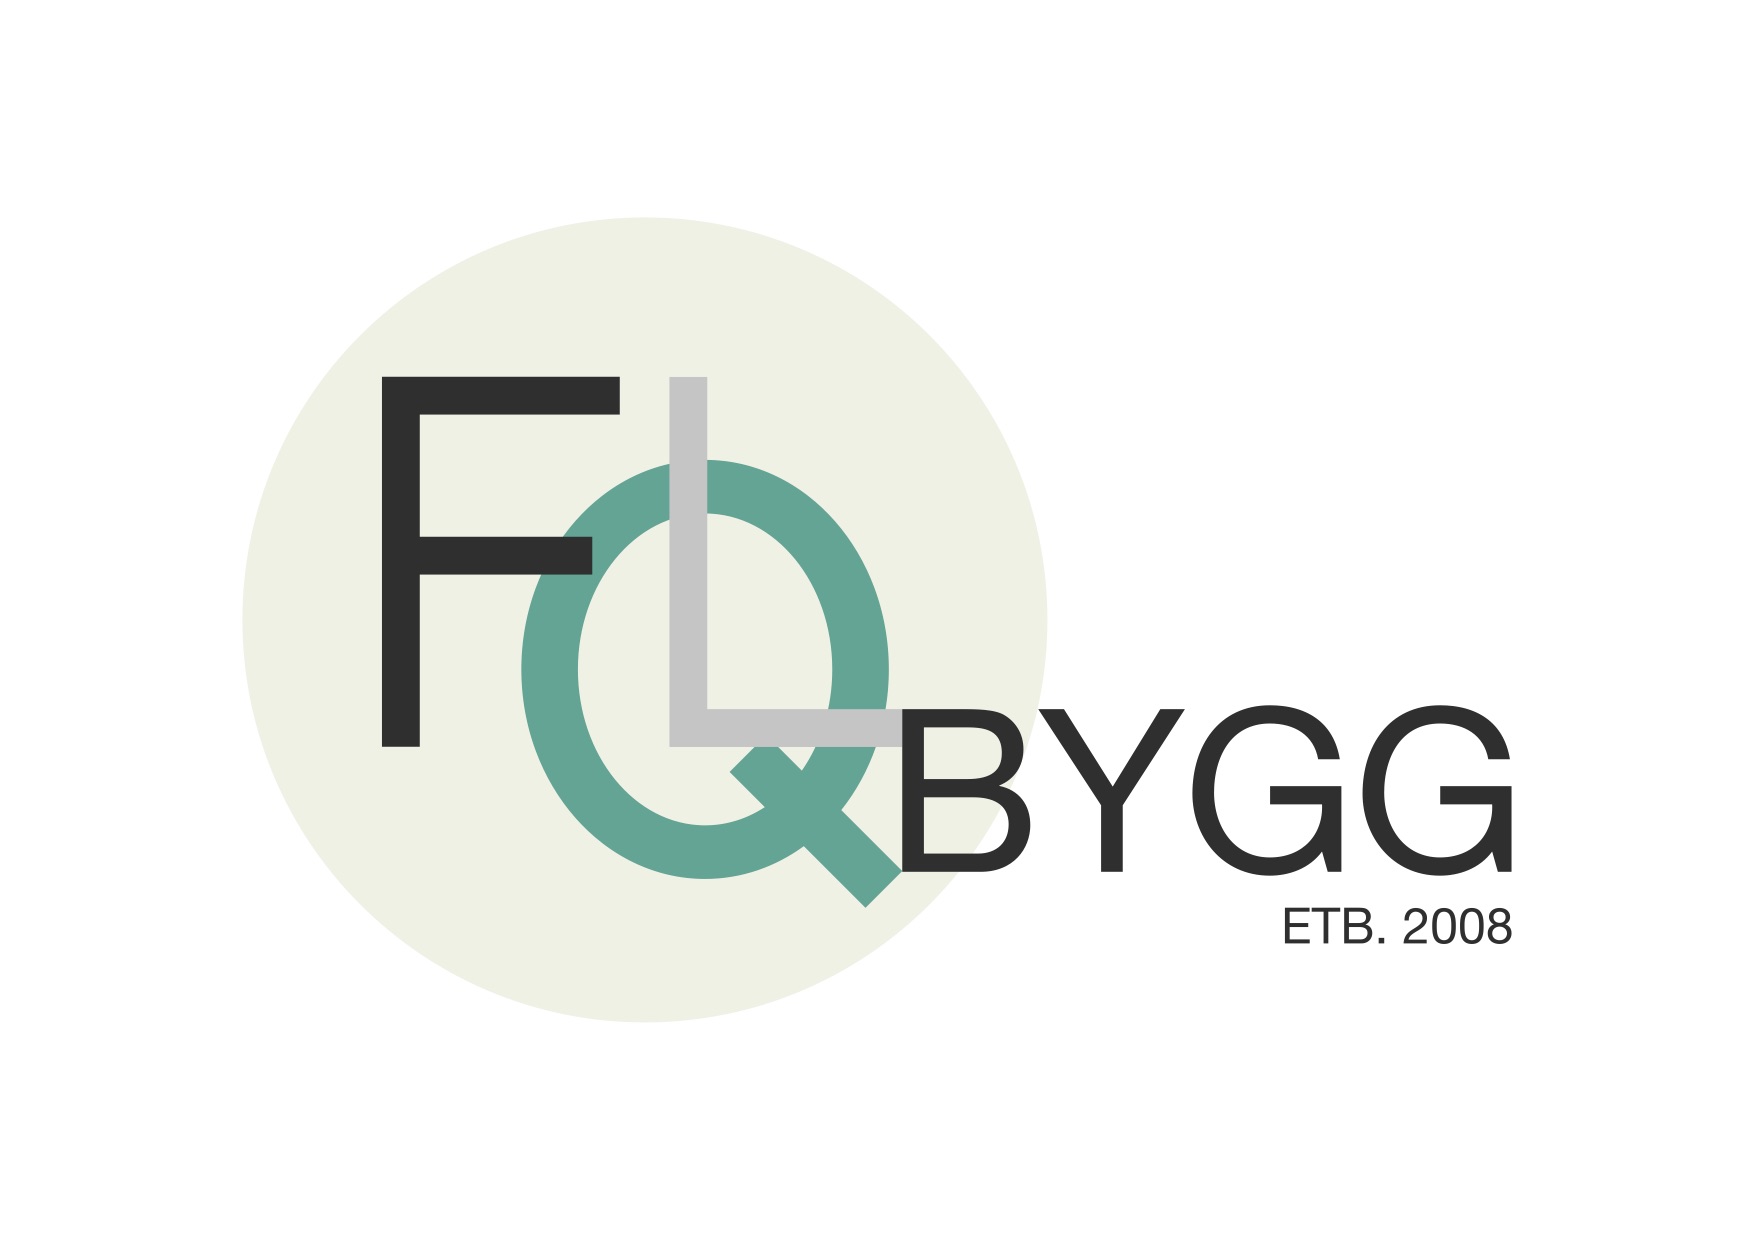 FLQ BYGG ETB.2008